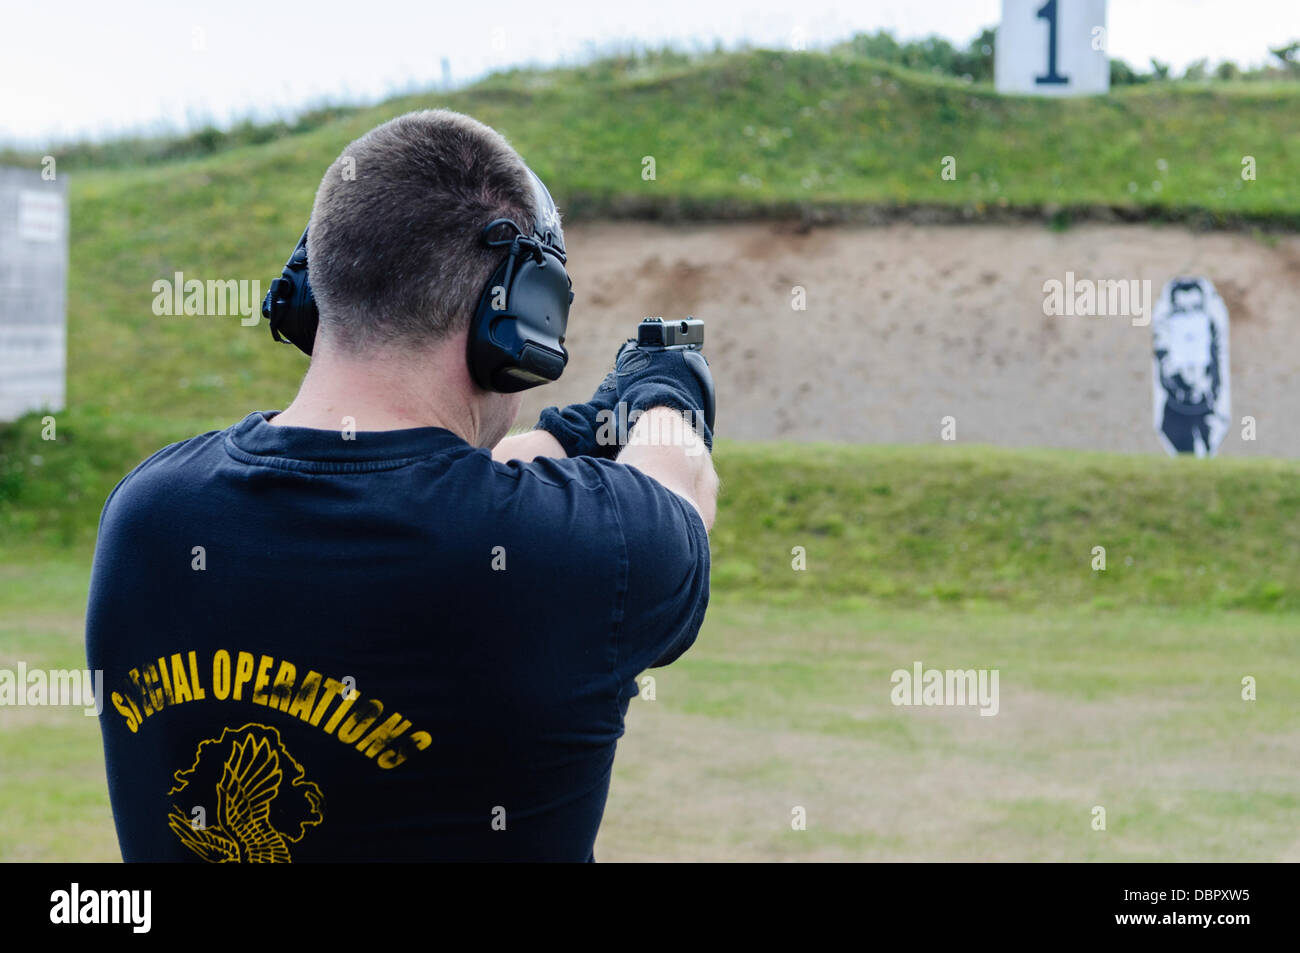 Ballykinlar, Northern Ireland. 2nd August 2013 - A man wearing a Special Operations tee shirt fires a Glock 19 handgun at a firing range Credit:  Stephen Barnes/Alamy Live News Stock Photo